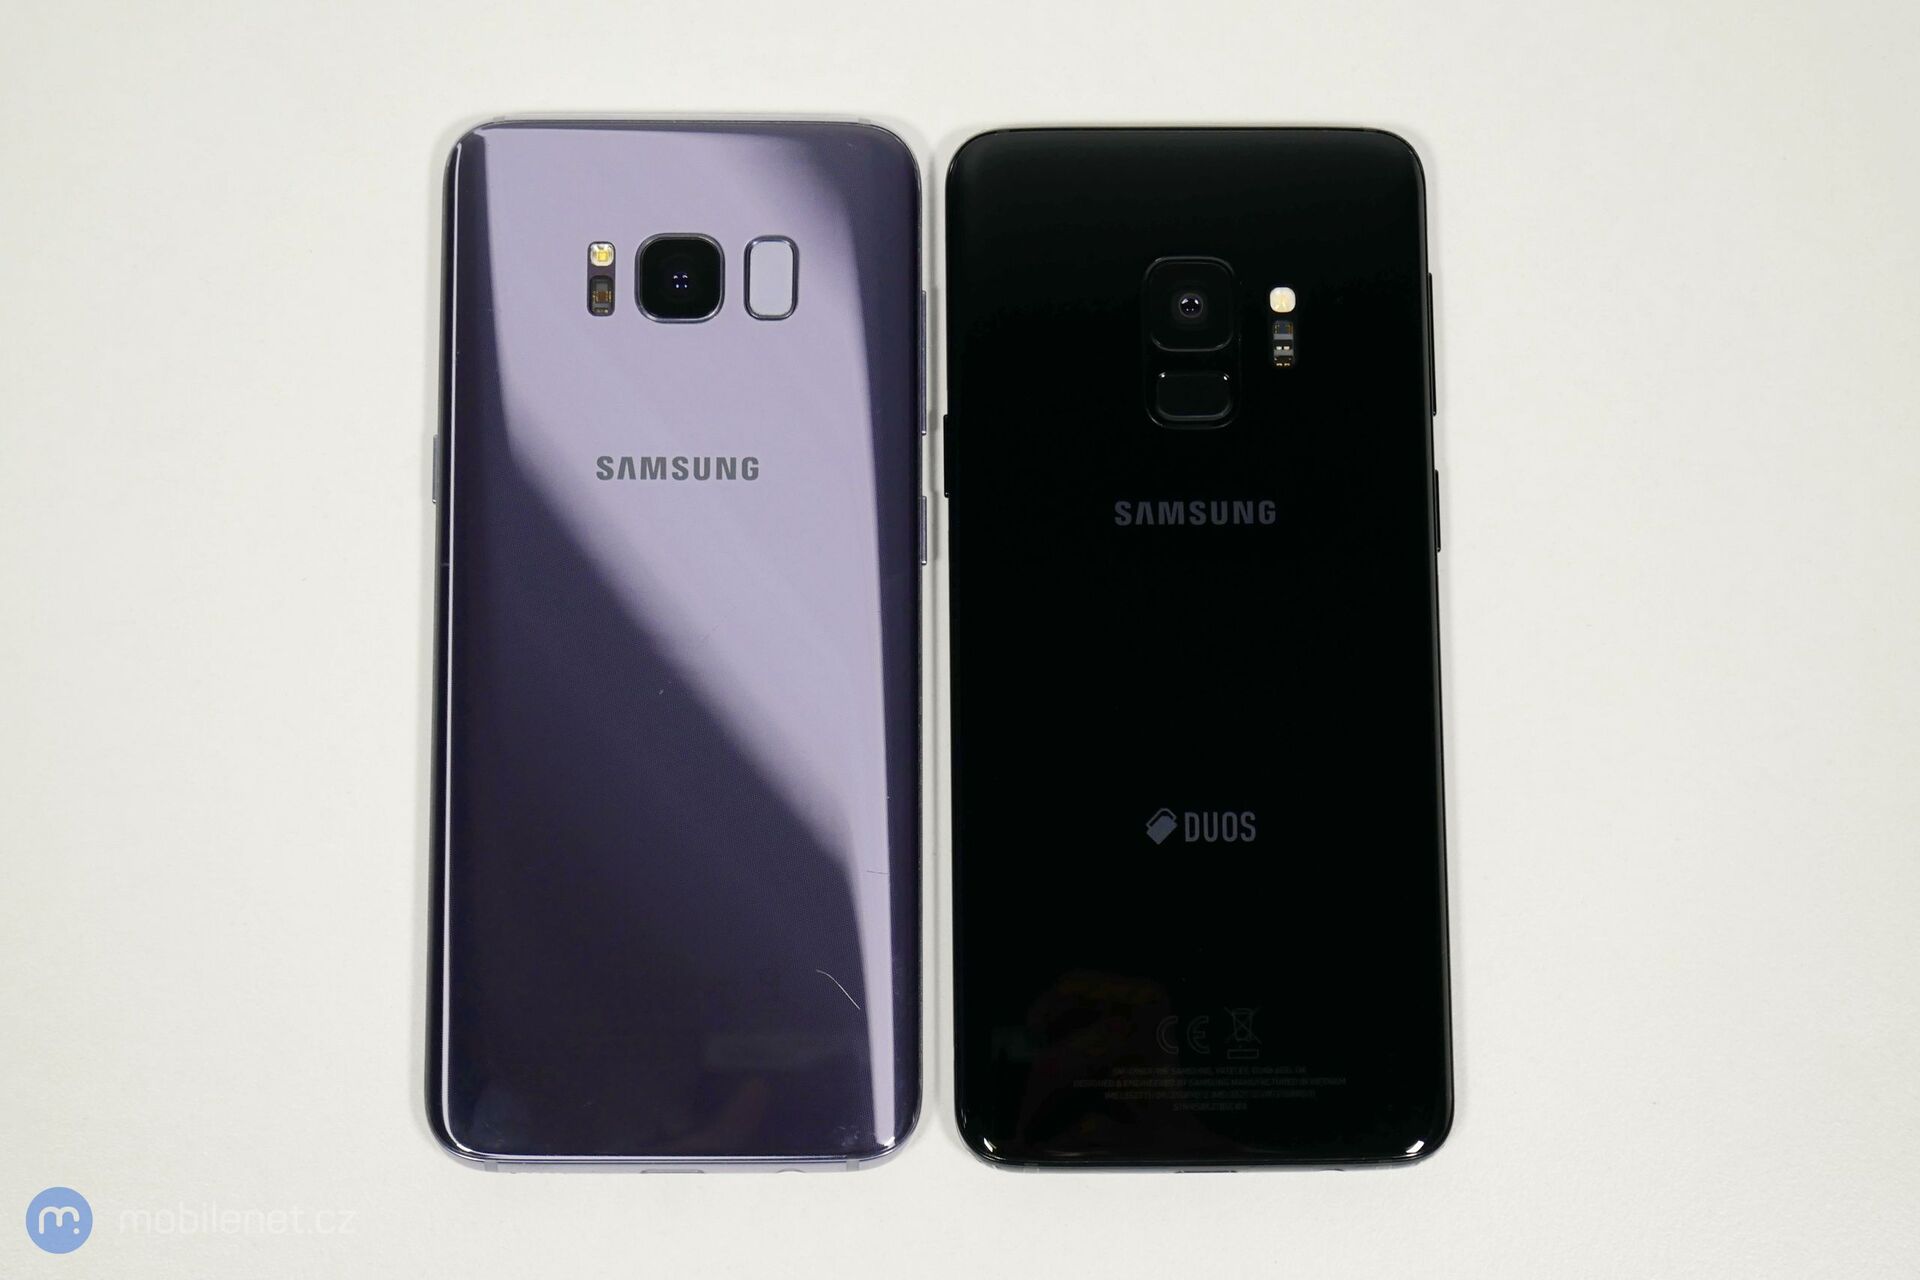 Samsung Galaxy S9 a Samsung Galaxy S8